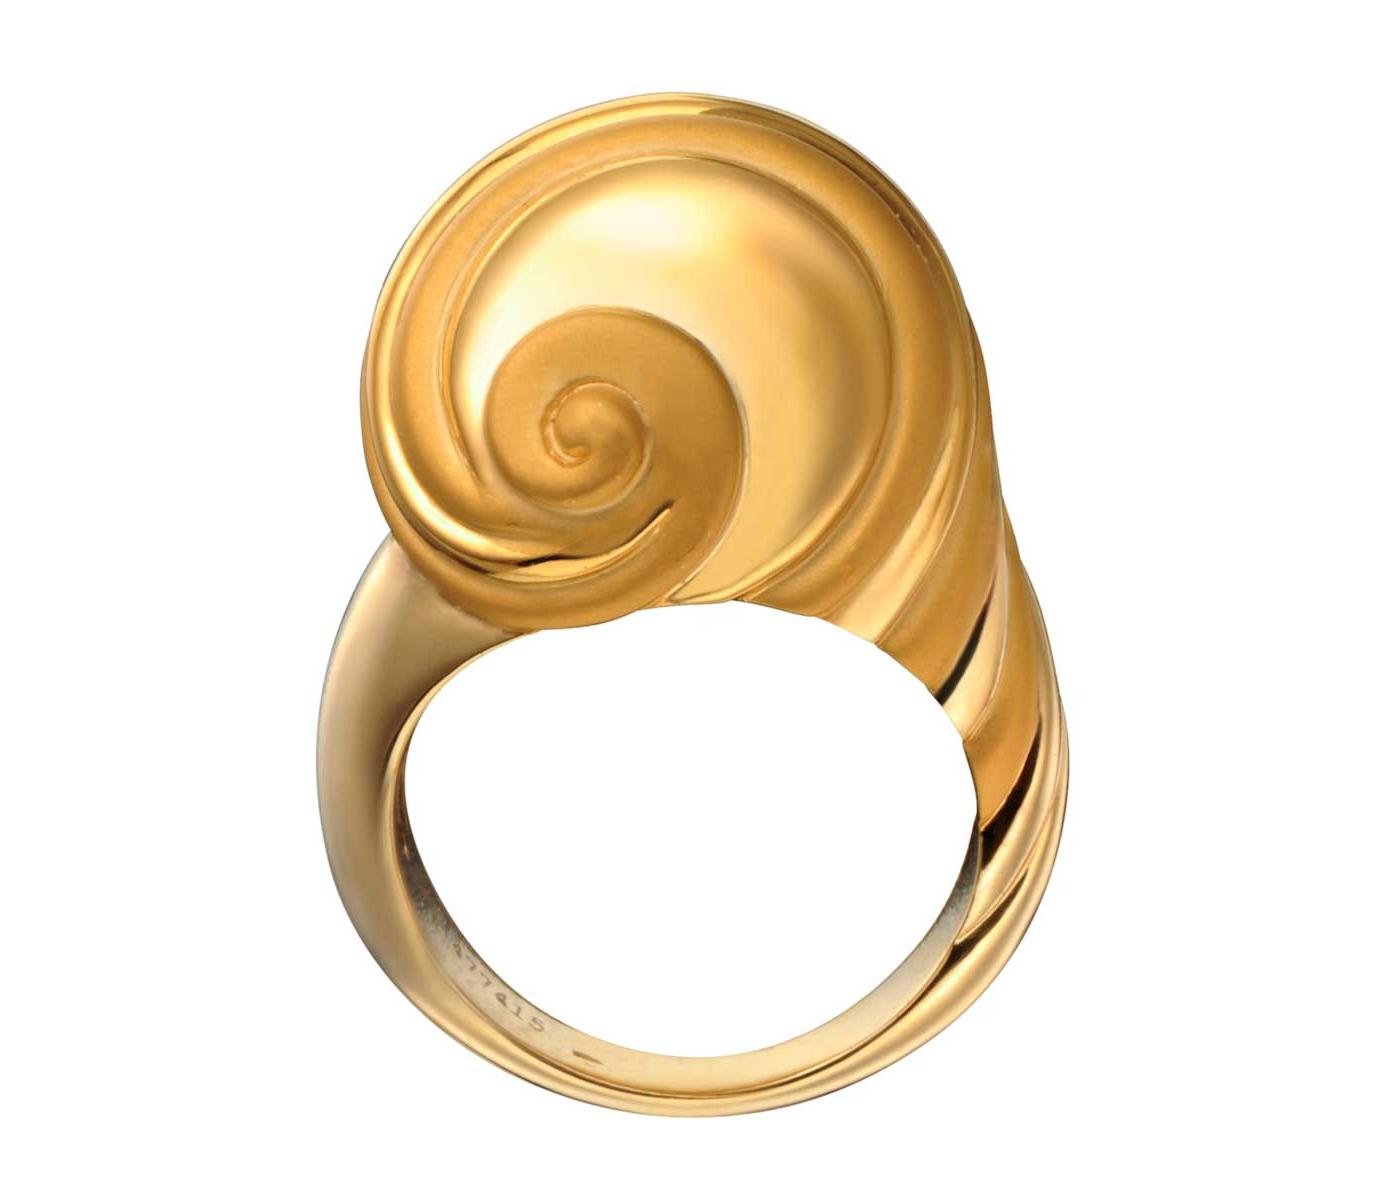 Ring by Carrera y Carrera